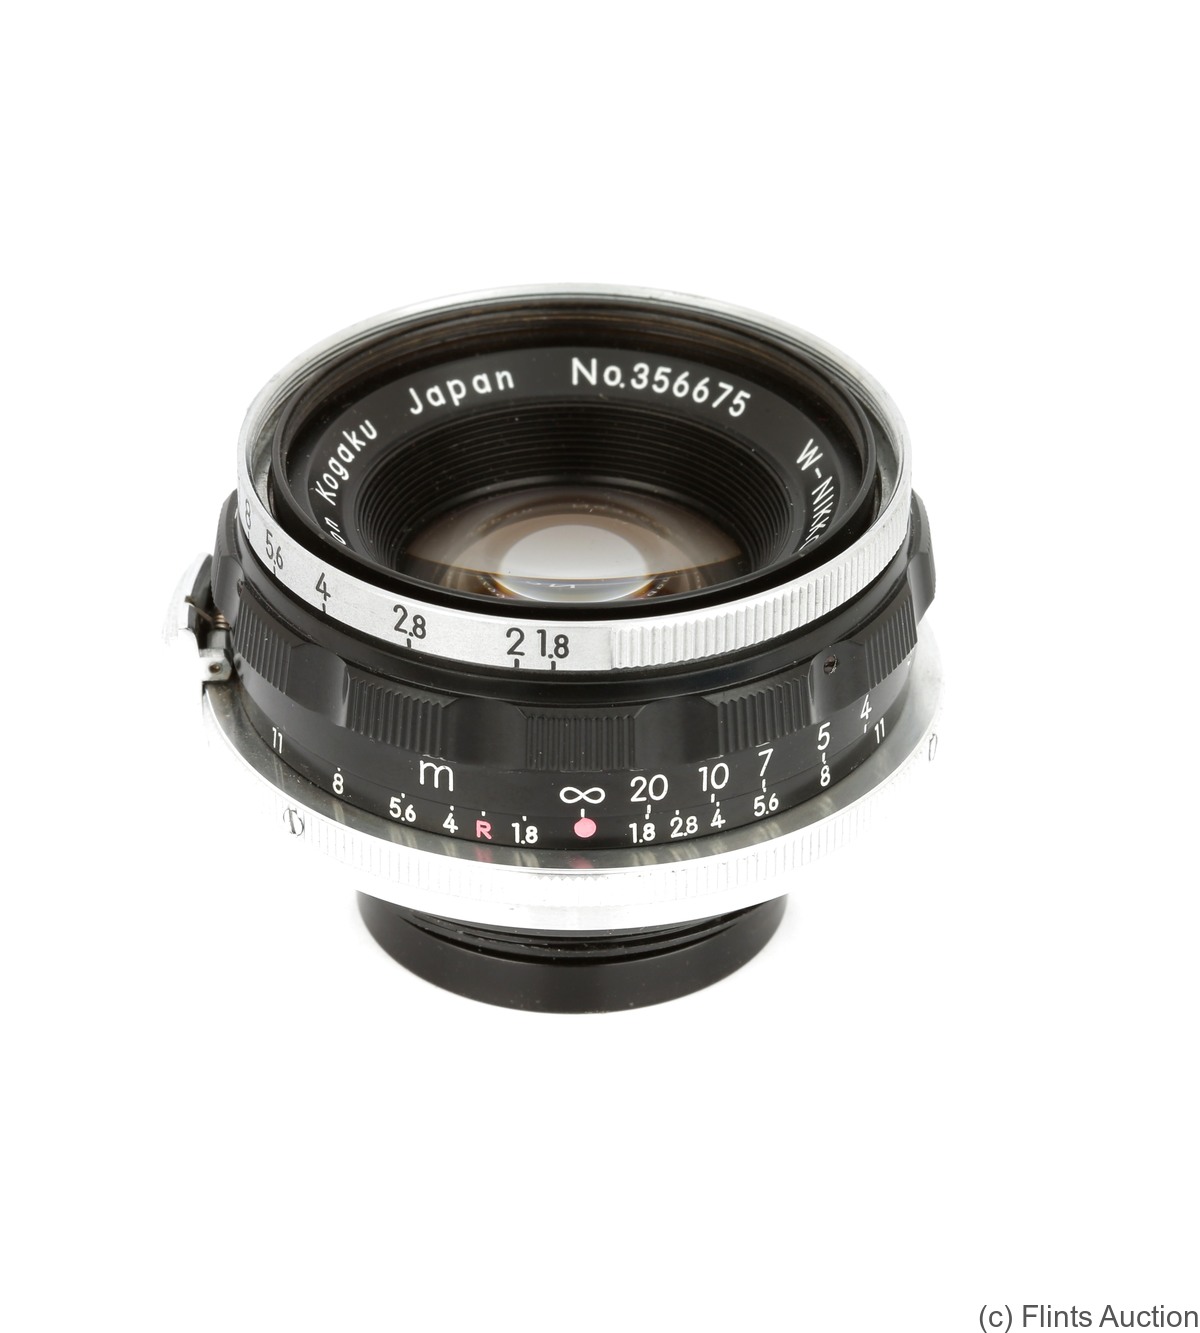 Nikon: 35mm (3.5cm) f1.8 W-Nikkor (BM) camera